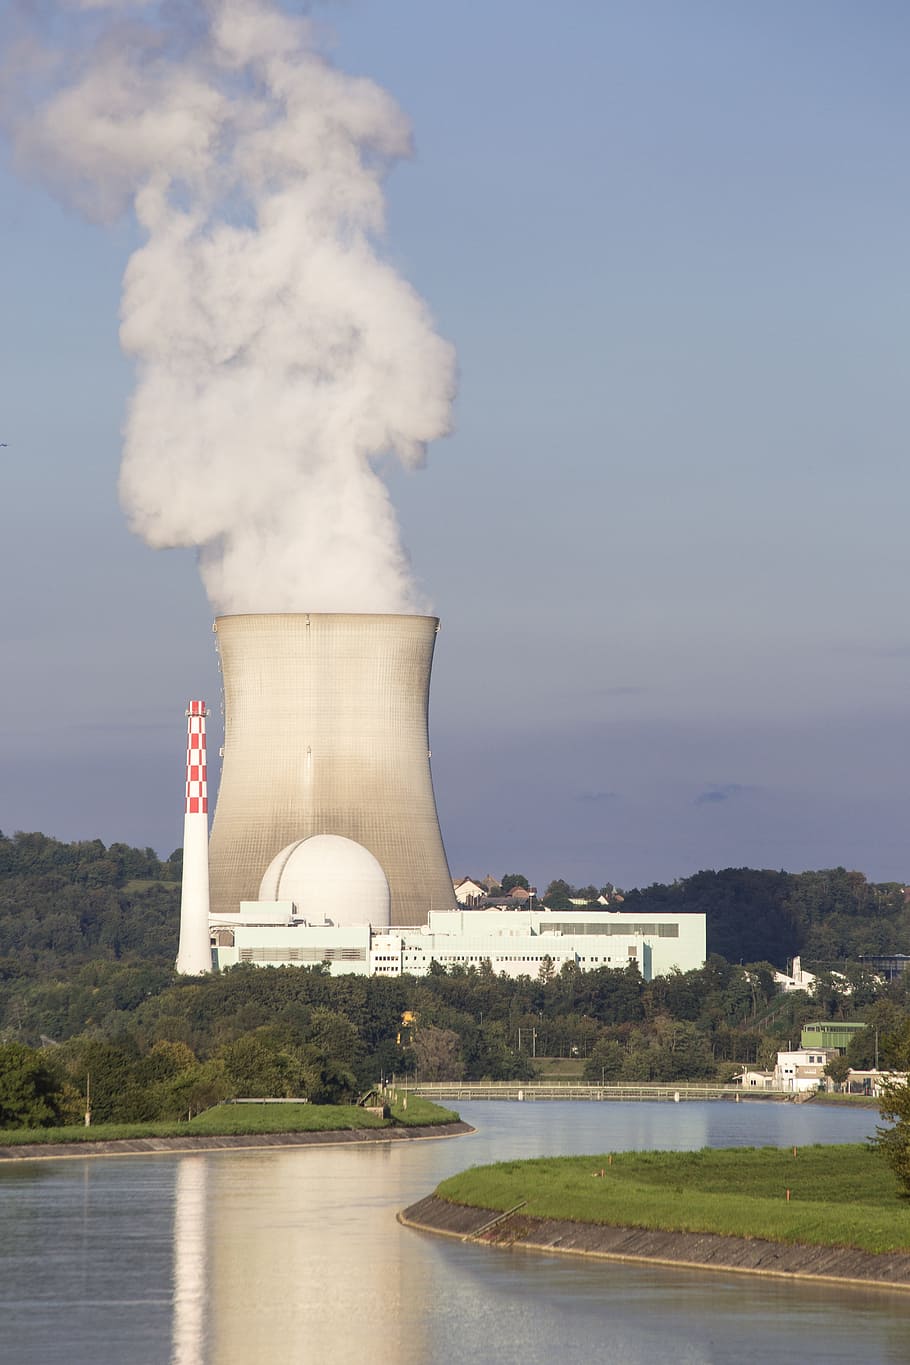 nuclear power plant, power plant, atomic energy, nuclear power, electricity, eco electricity, energy revolution, atom, reactor, energy